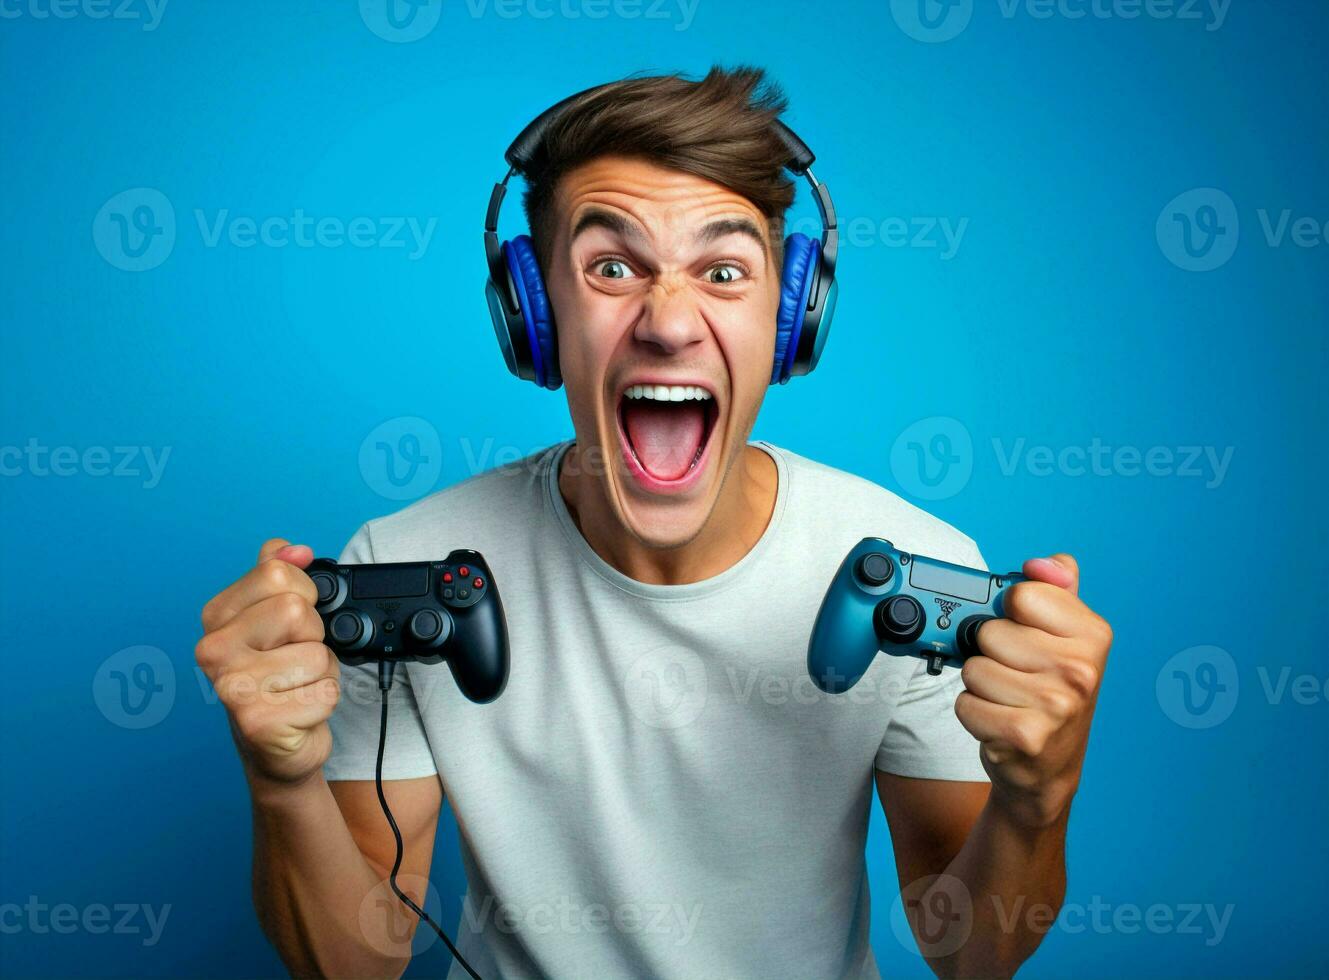 Man student happy playing headphones internet joystick video screaming pad leisure gamer expression photo